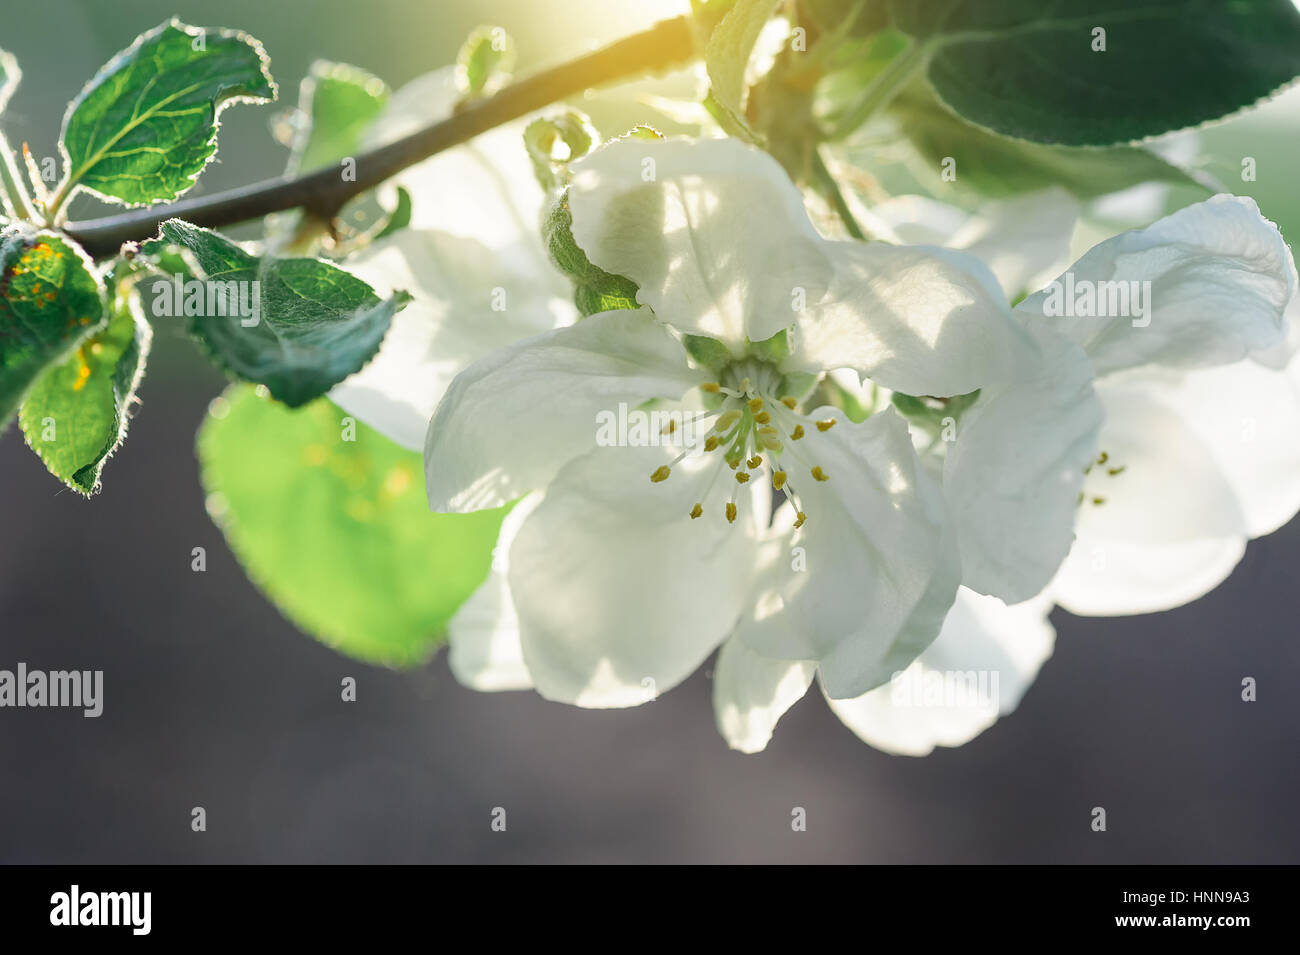 Blühende Apfelbäume in einem Frühlingsgarten Stockfoto